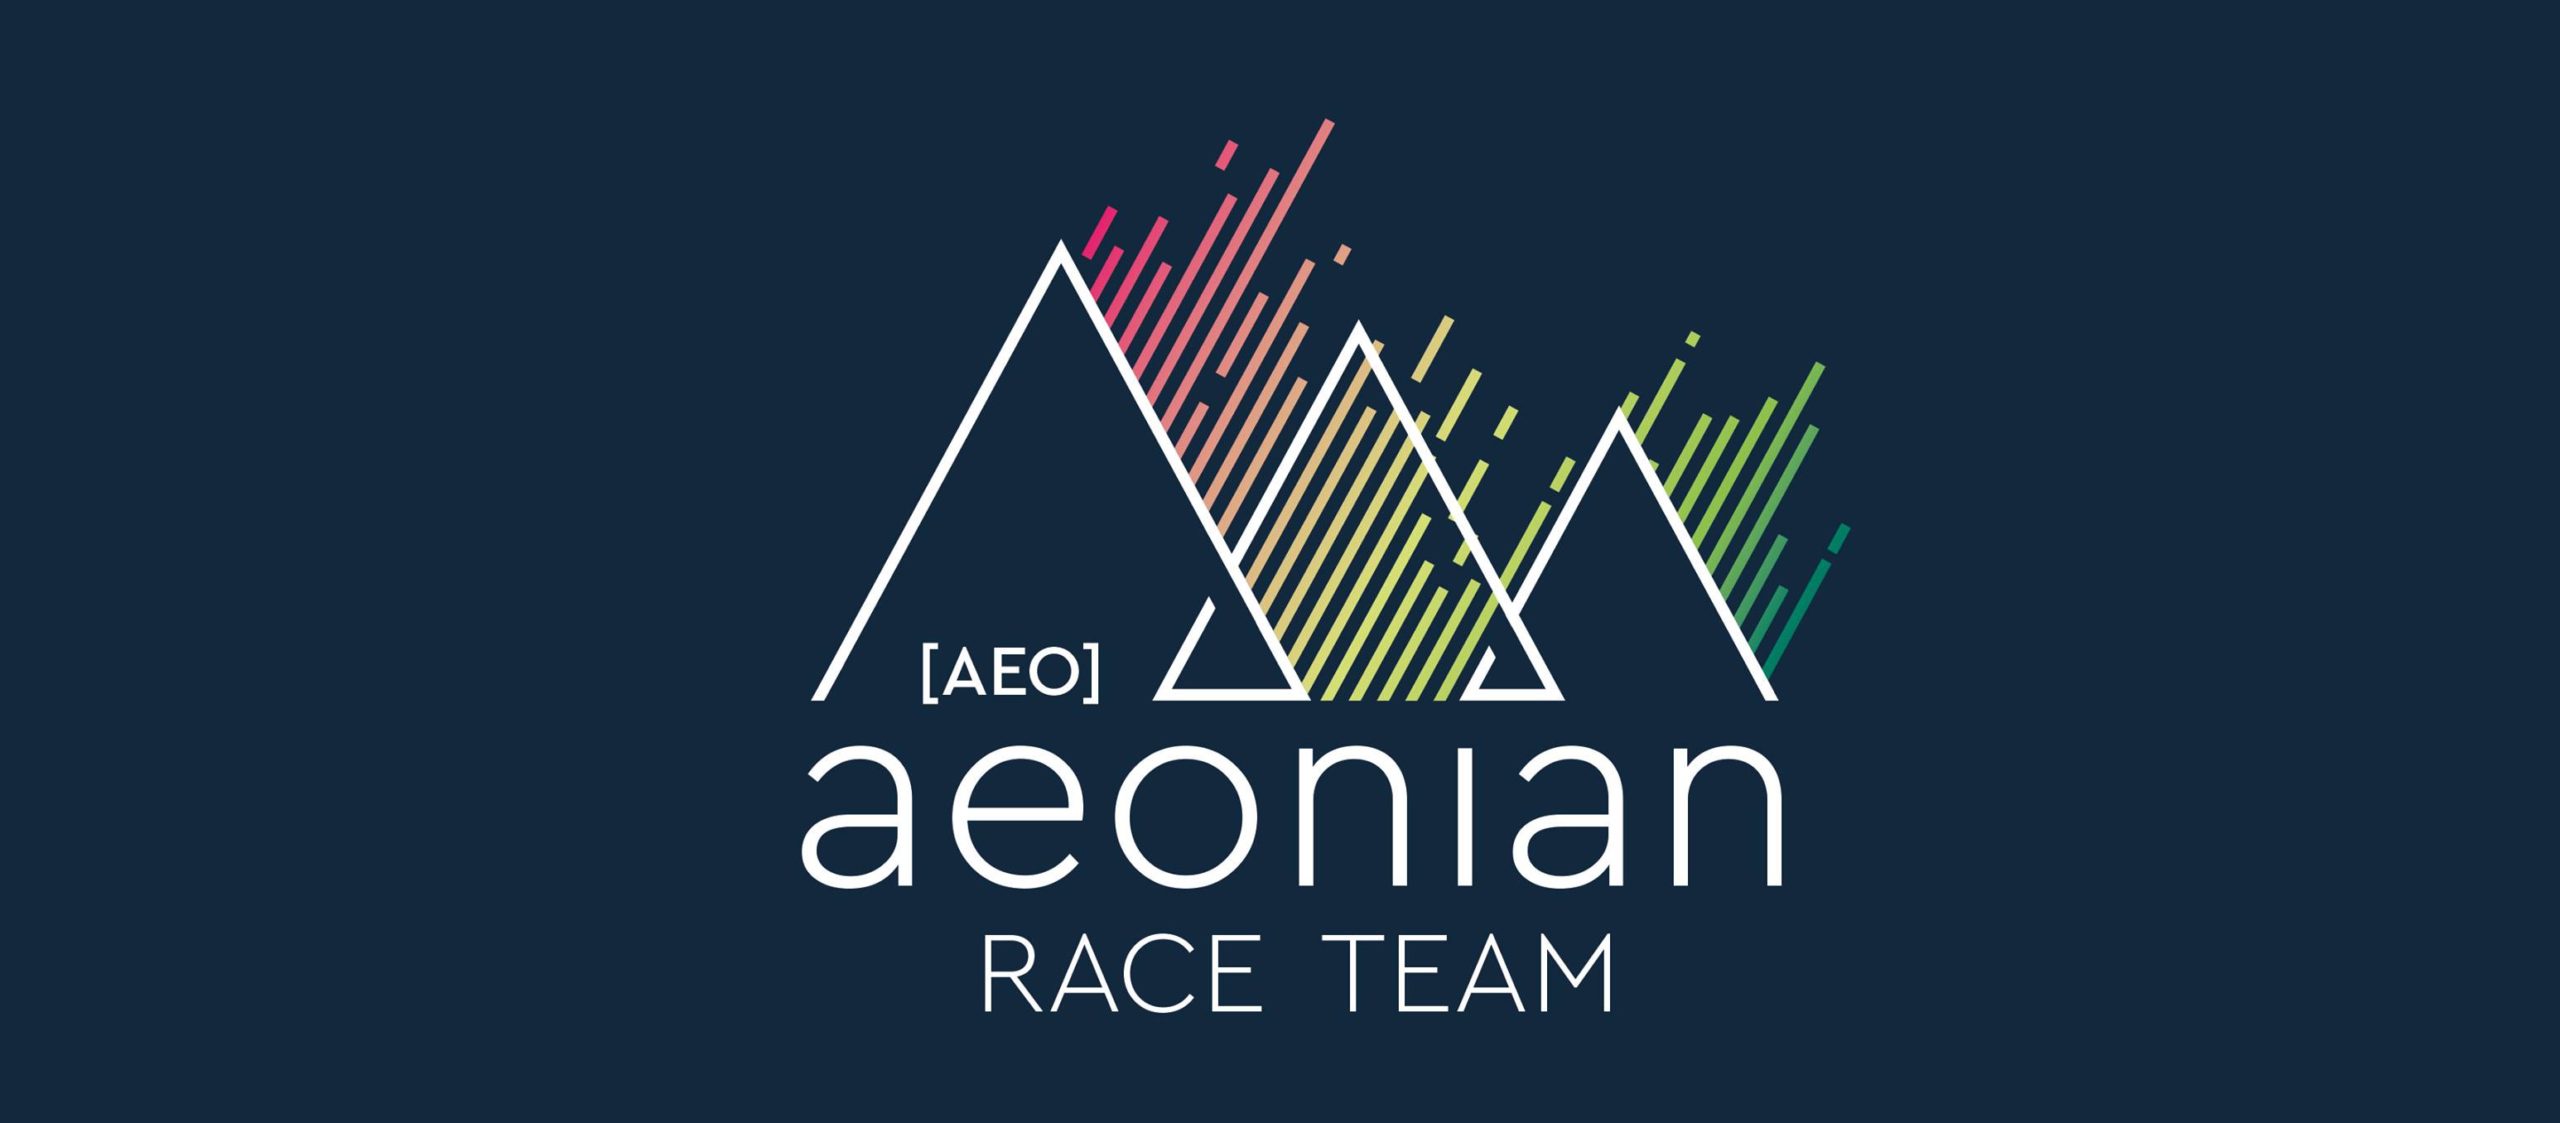 Aeonian Race Team